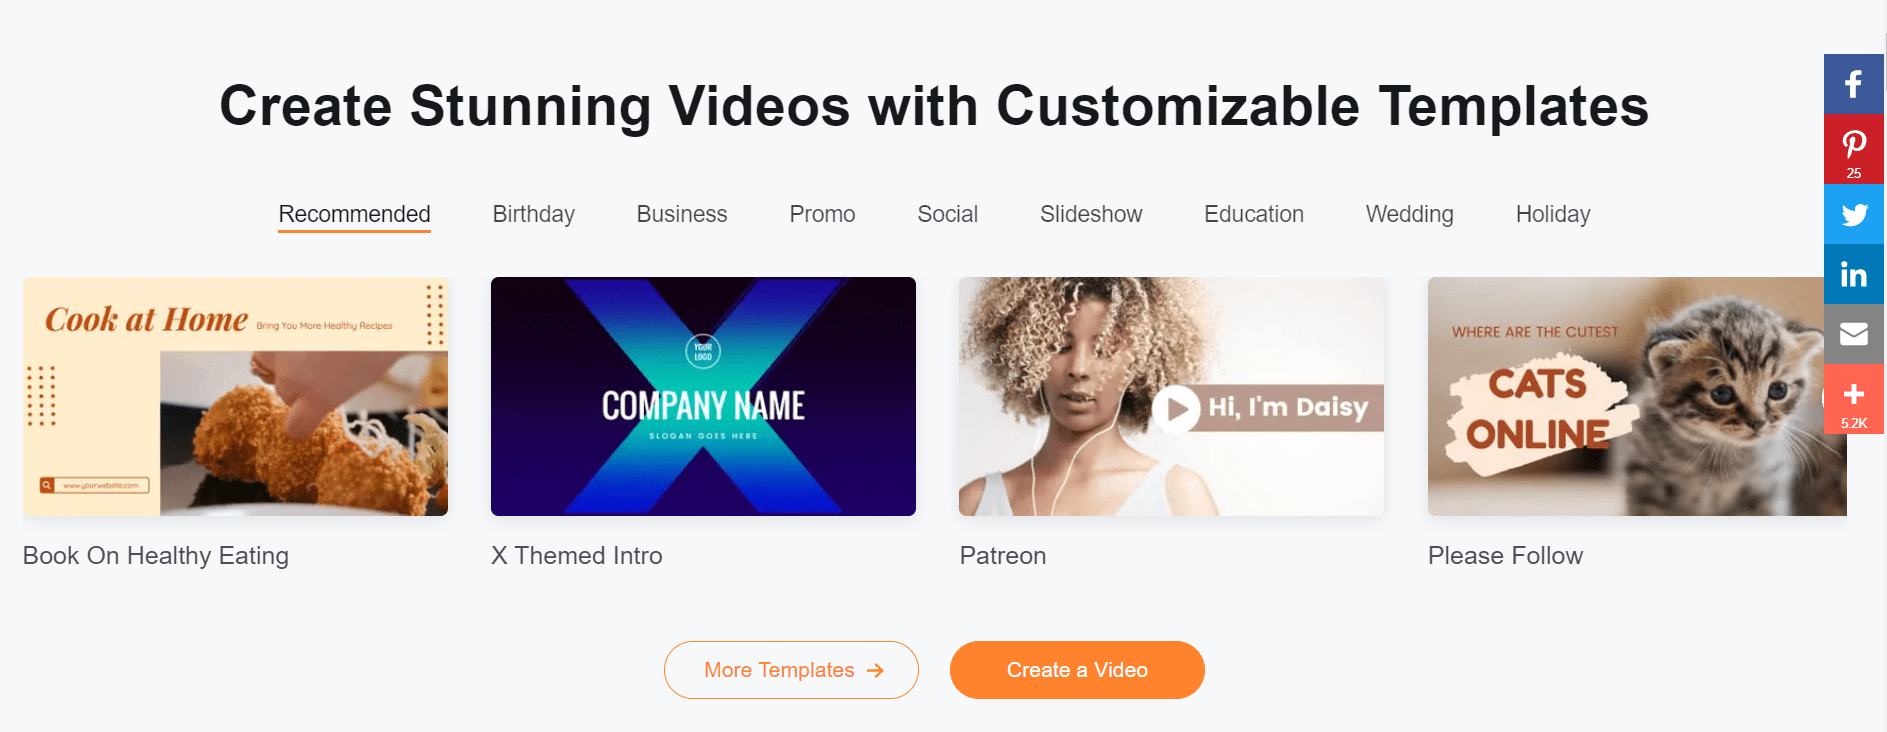 Create Stunning Videos with Customizable Templates